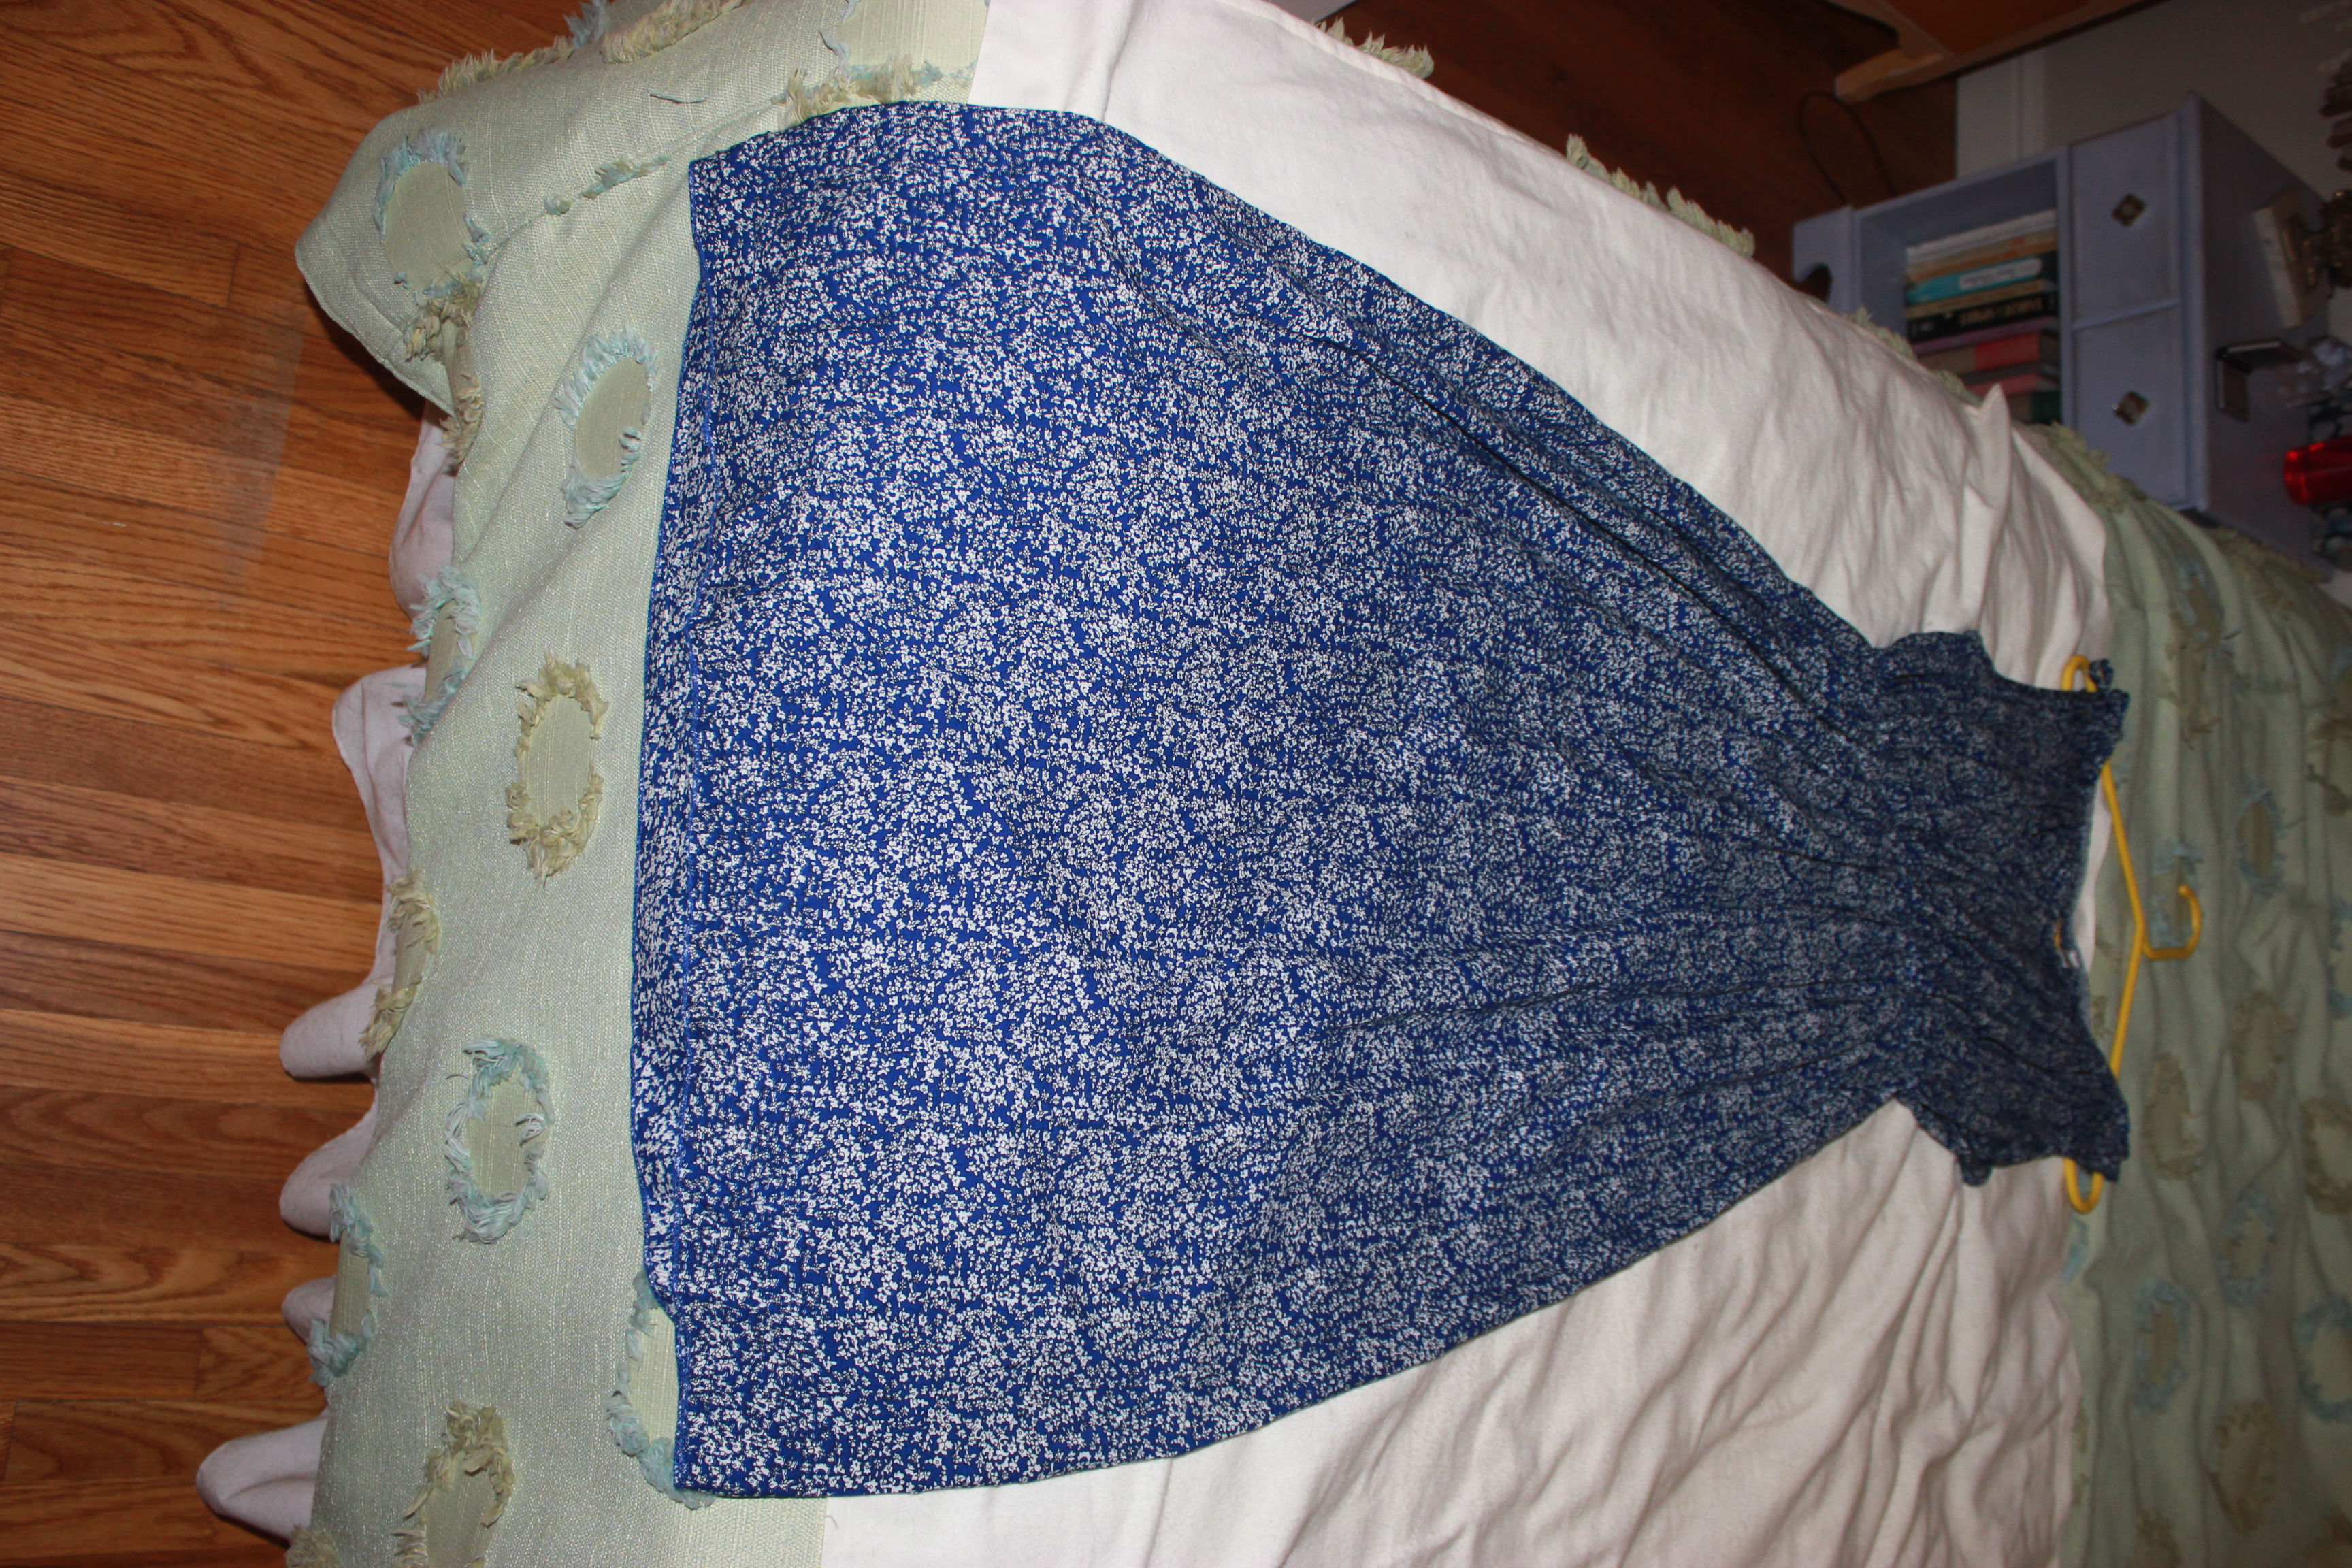 much narrower hem, cheap poly fabric, no bust room